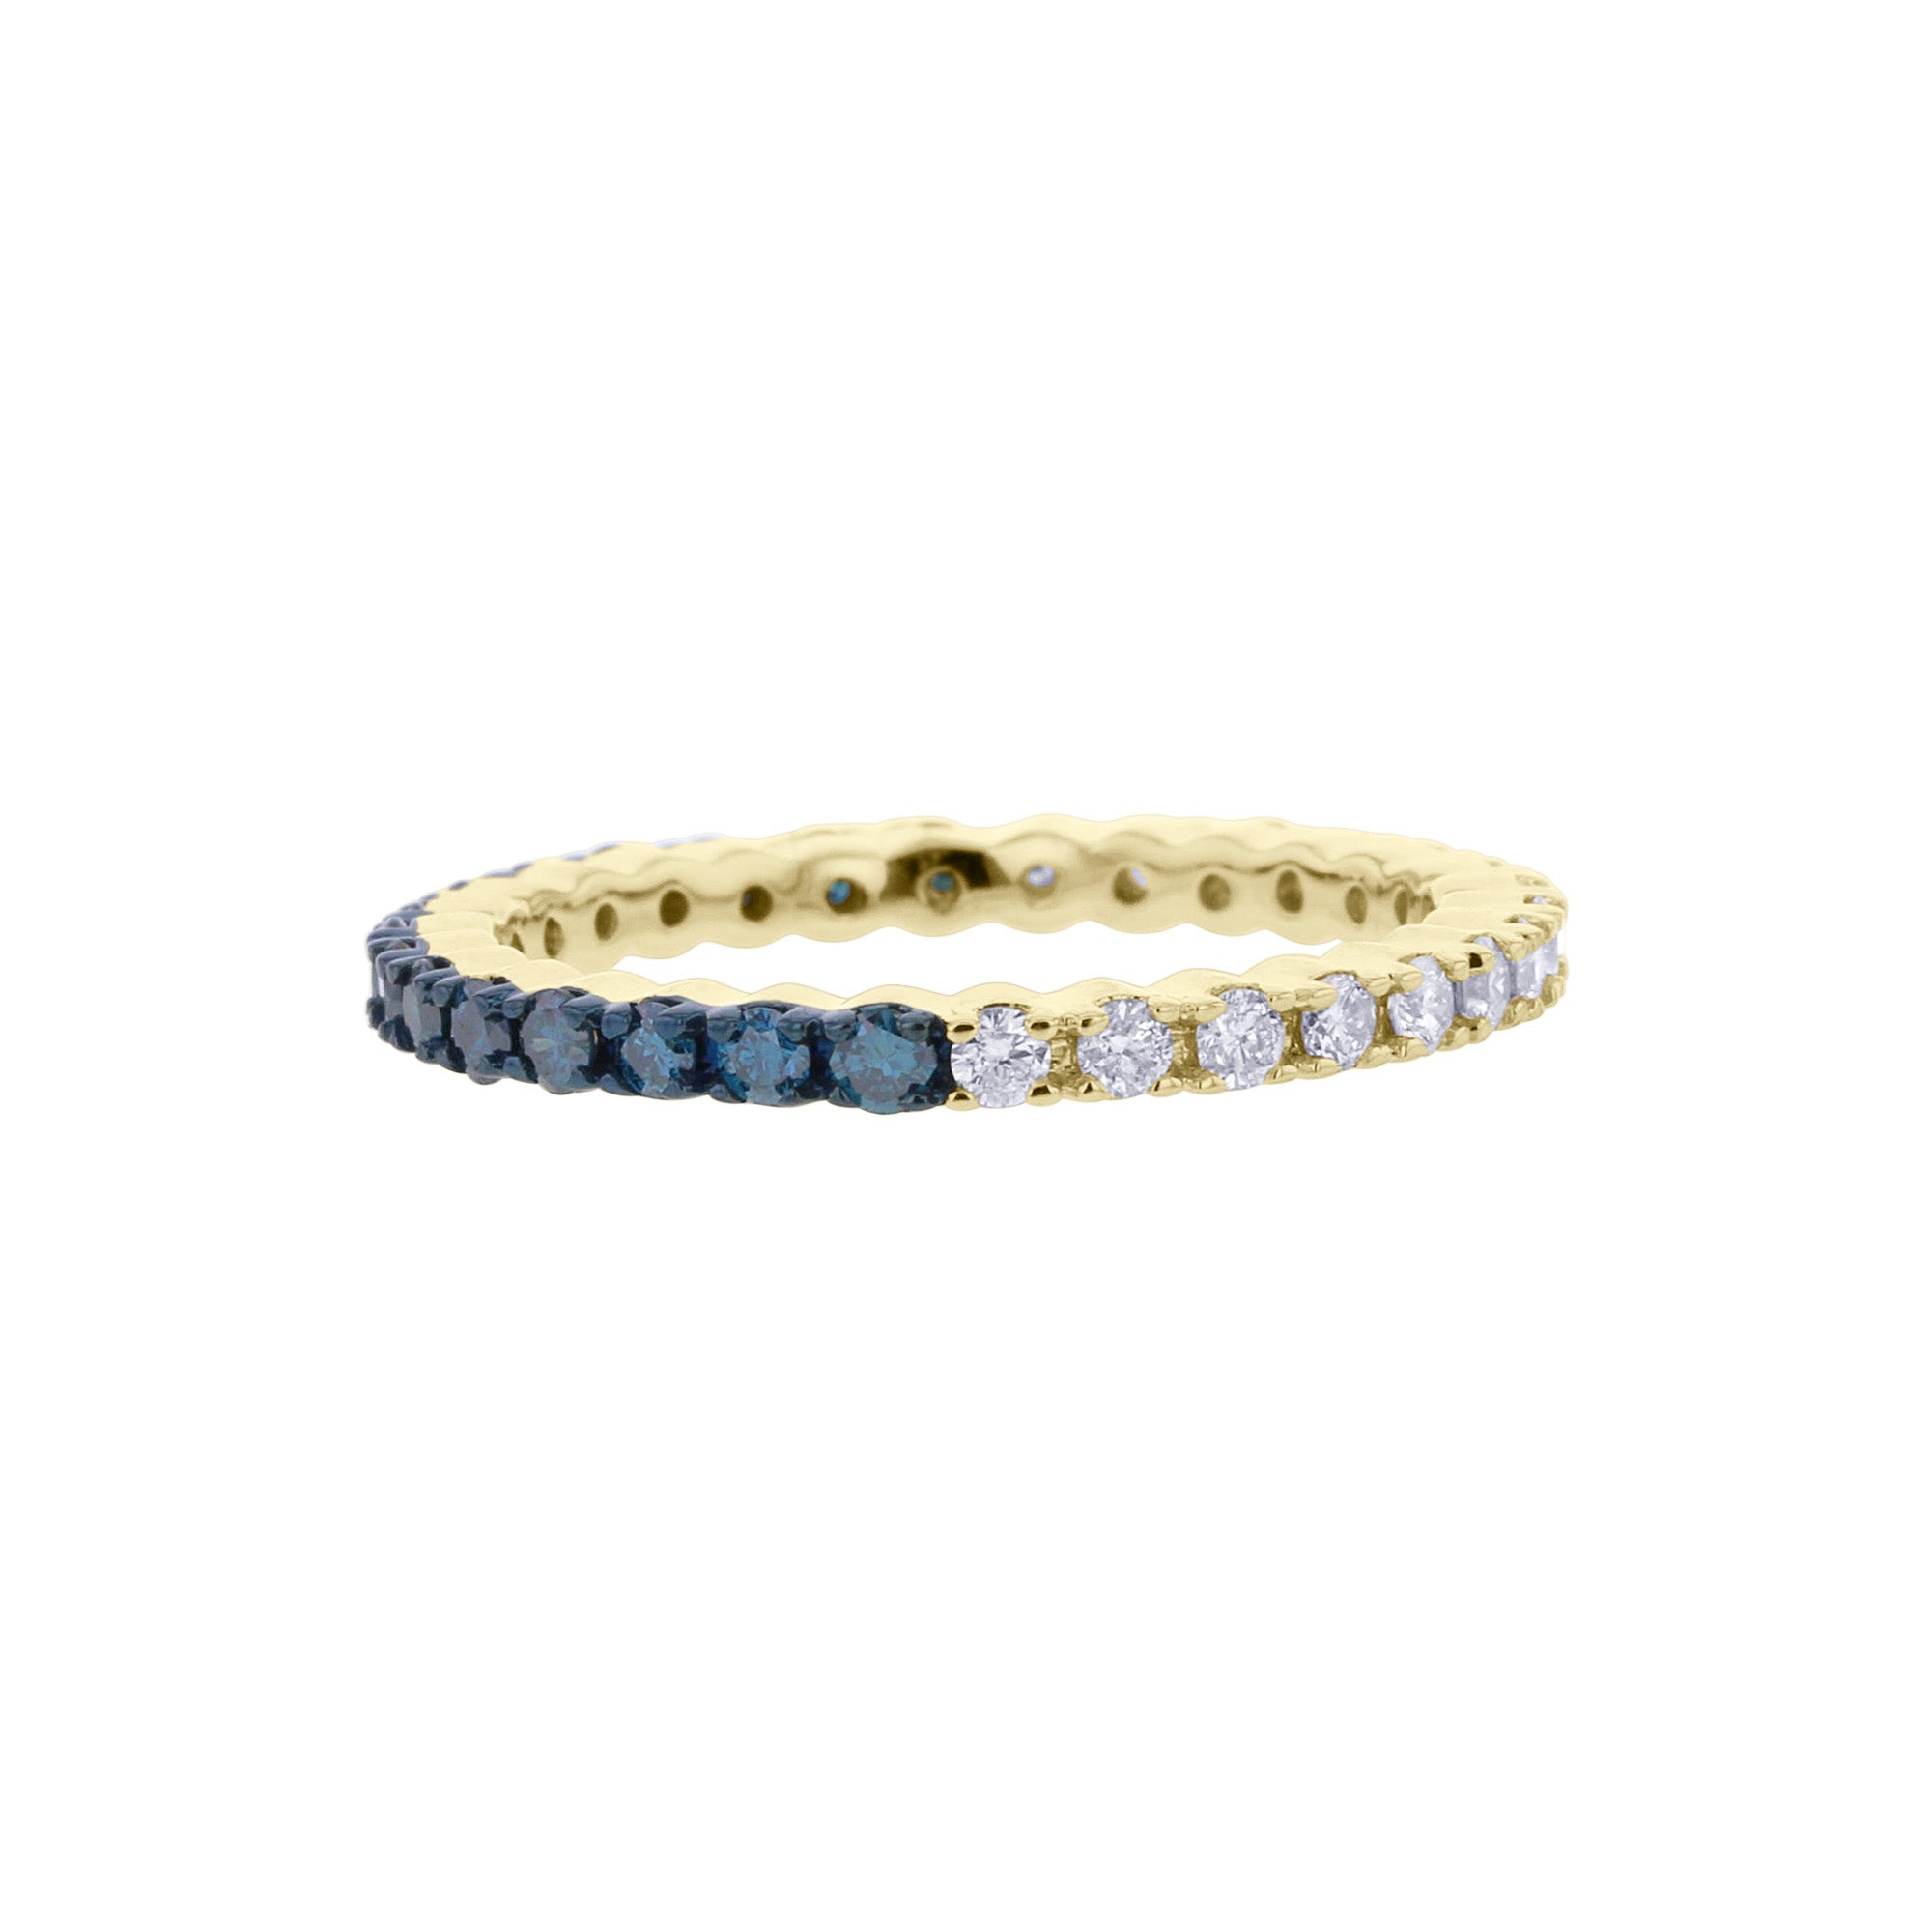 Our gorgeous 2 tone blue and white diamond ring.